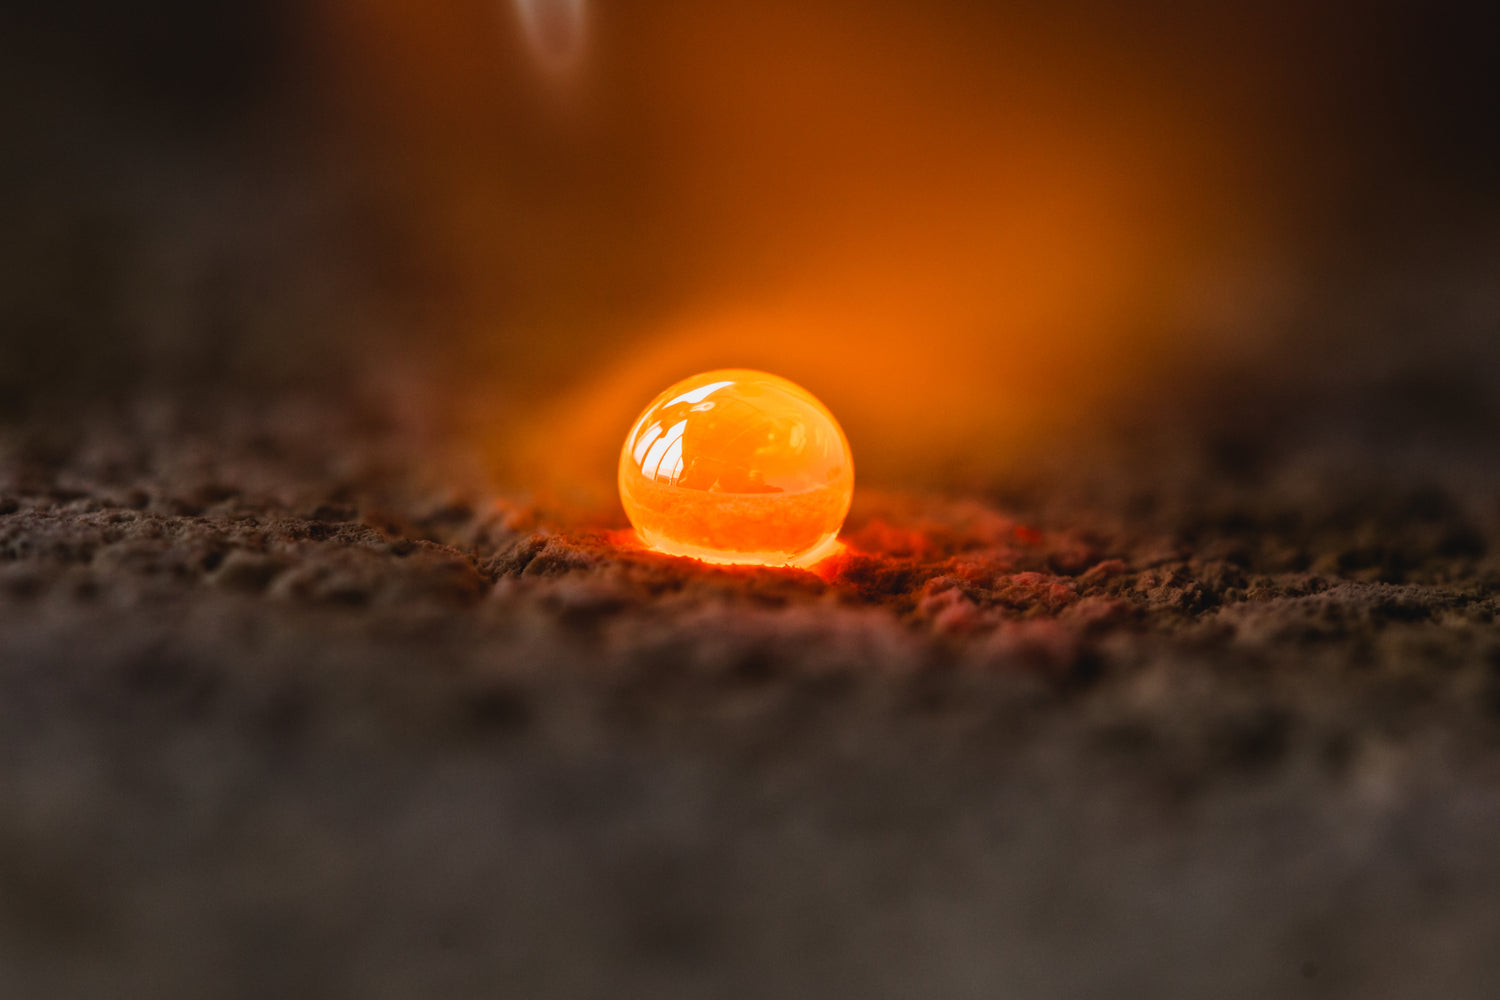 A ball of liquid metal glowing orange